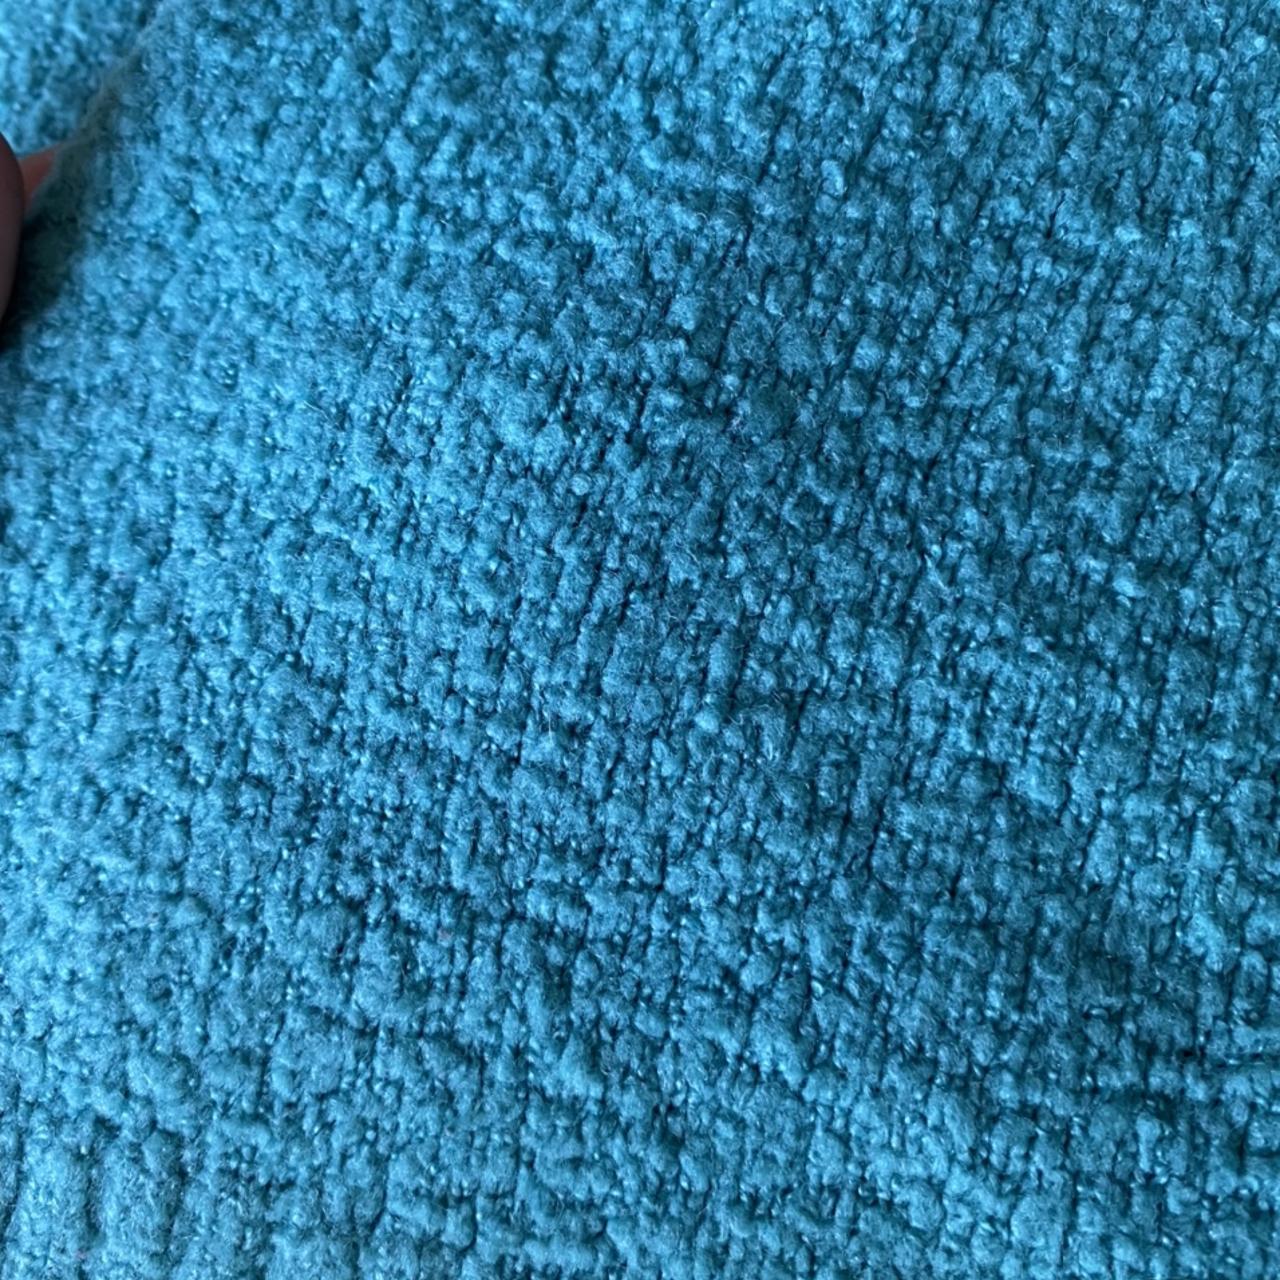 Product Image 4 - Fuzzy blue v neck sweater